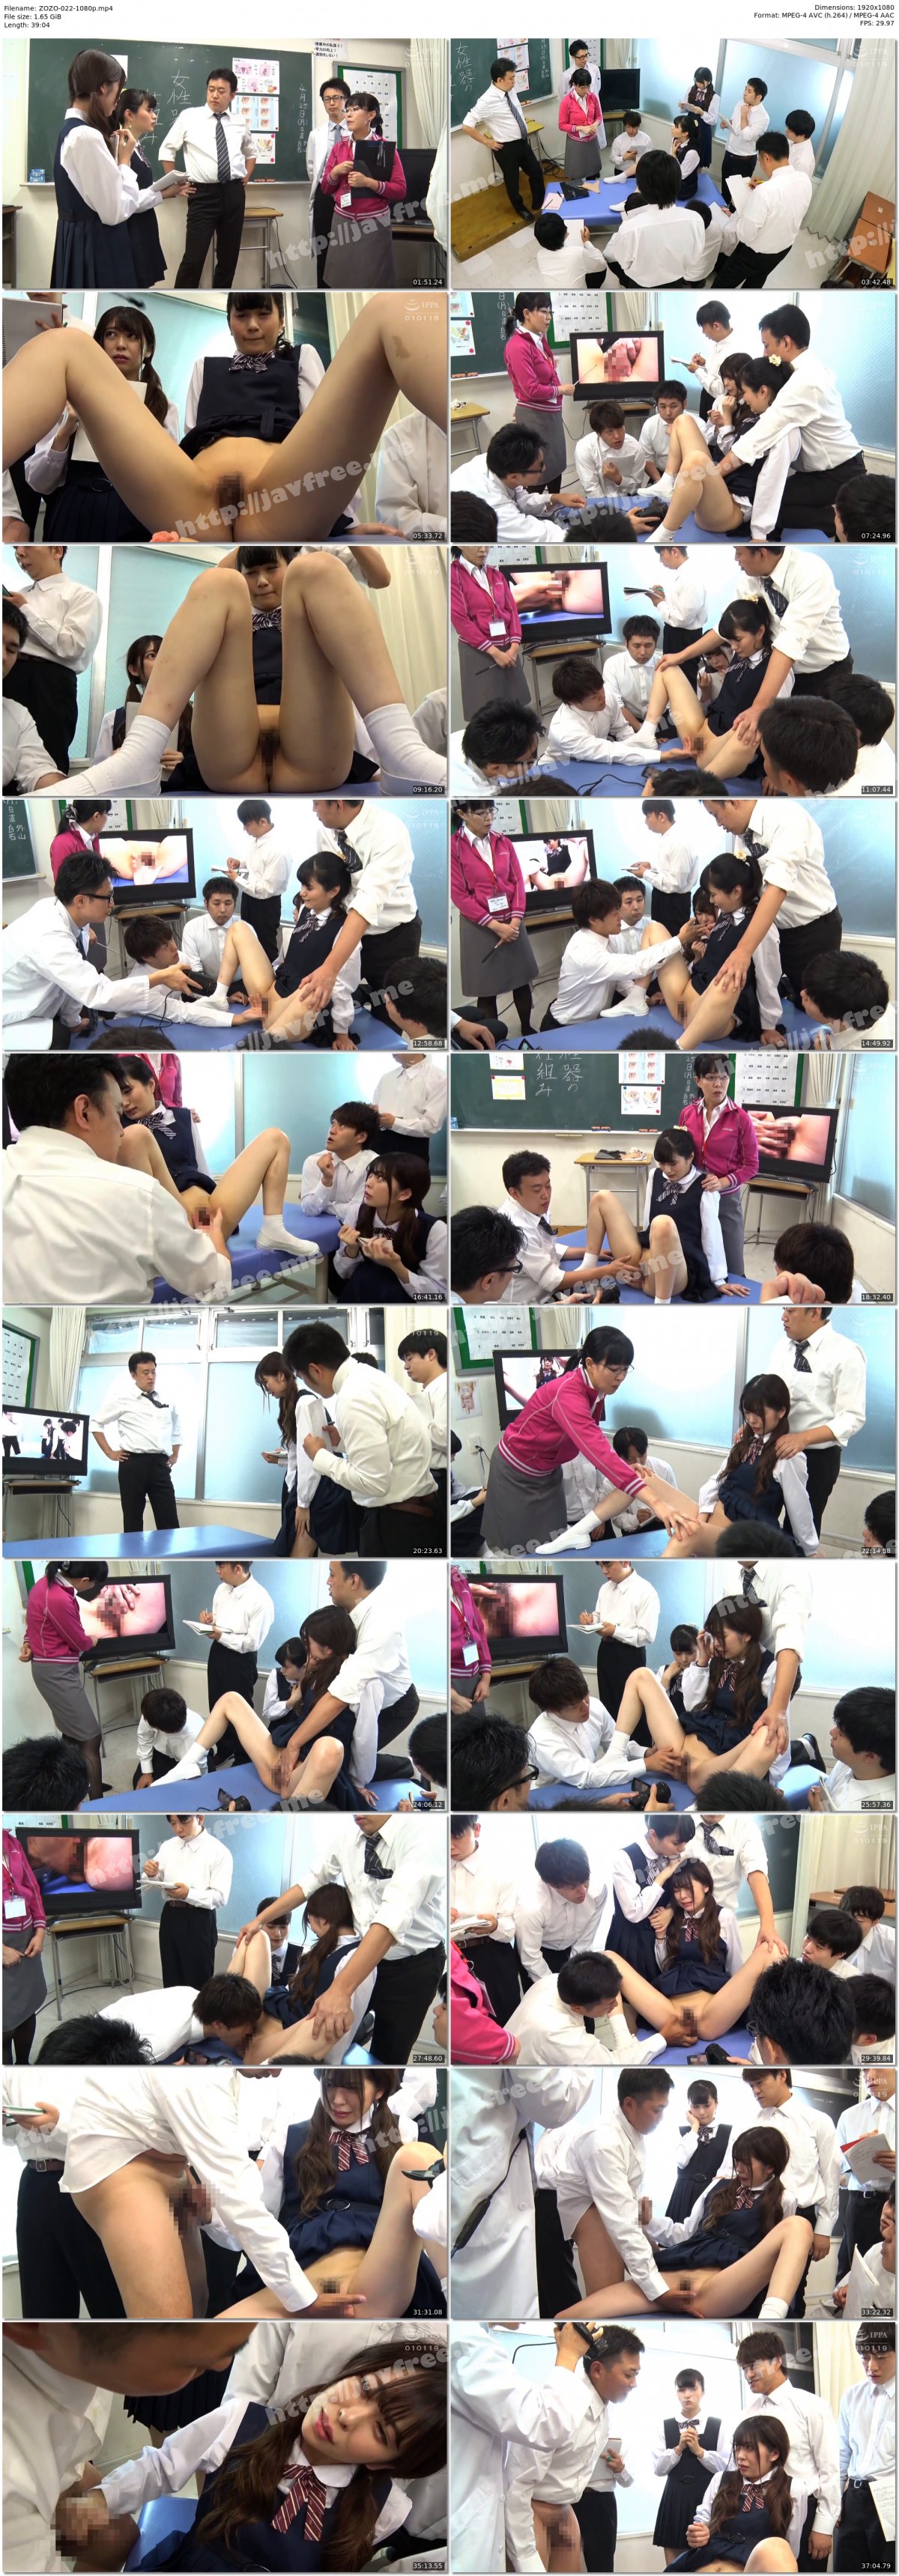 [HD][ZOZO-022] 共学校の保健体育2020年・3時限目 女性器の仕組みについて - image ZOZO-022-1080p on /